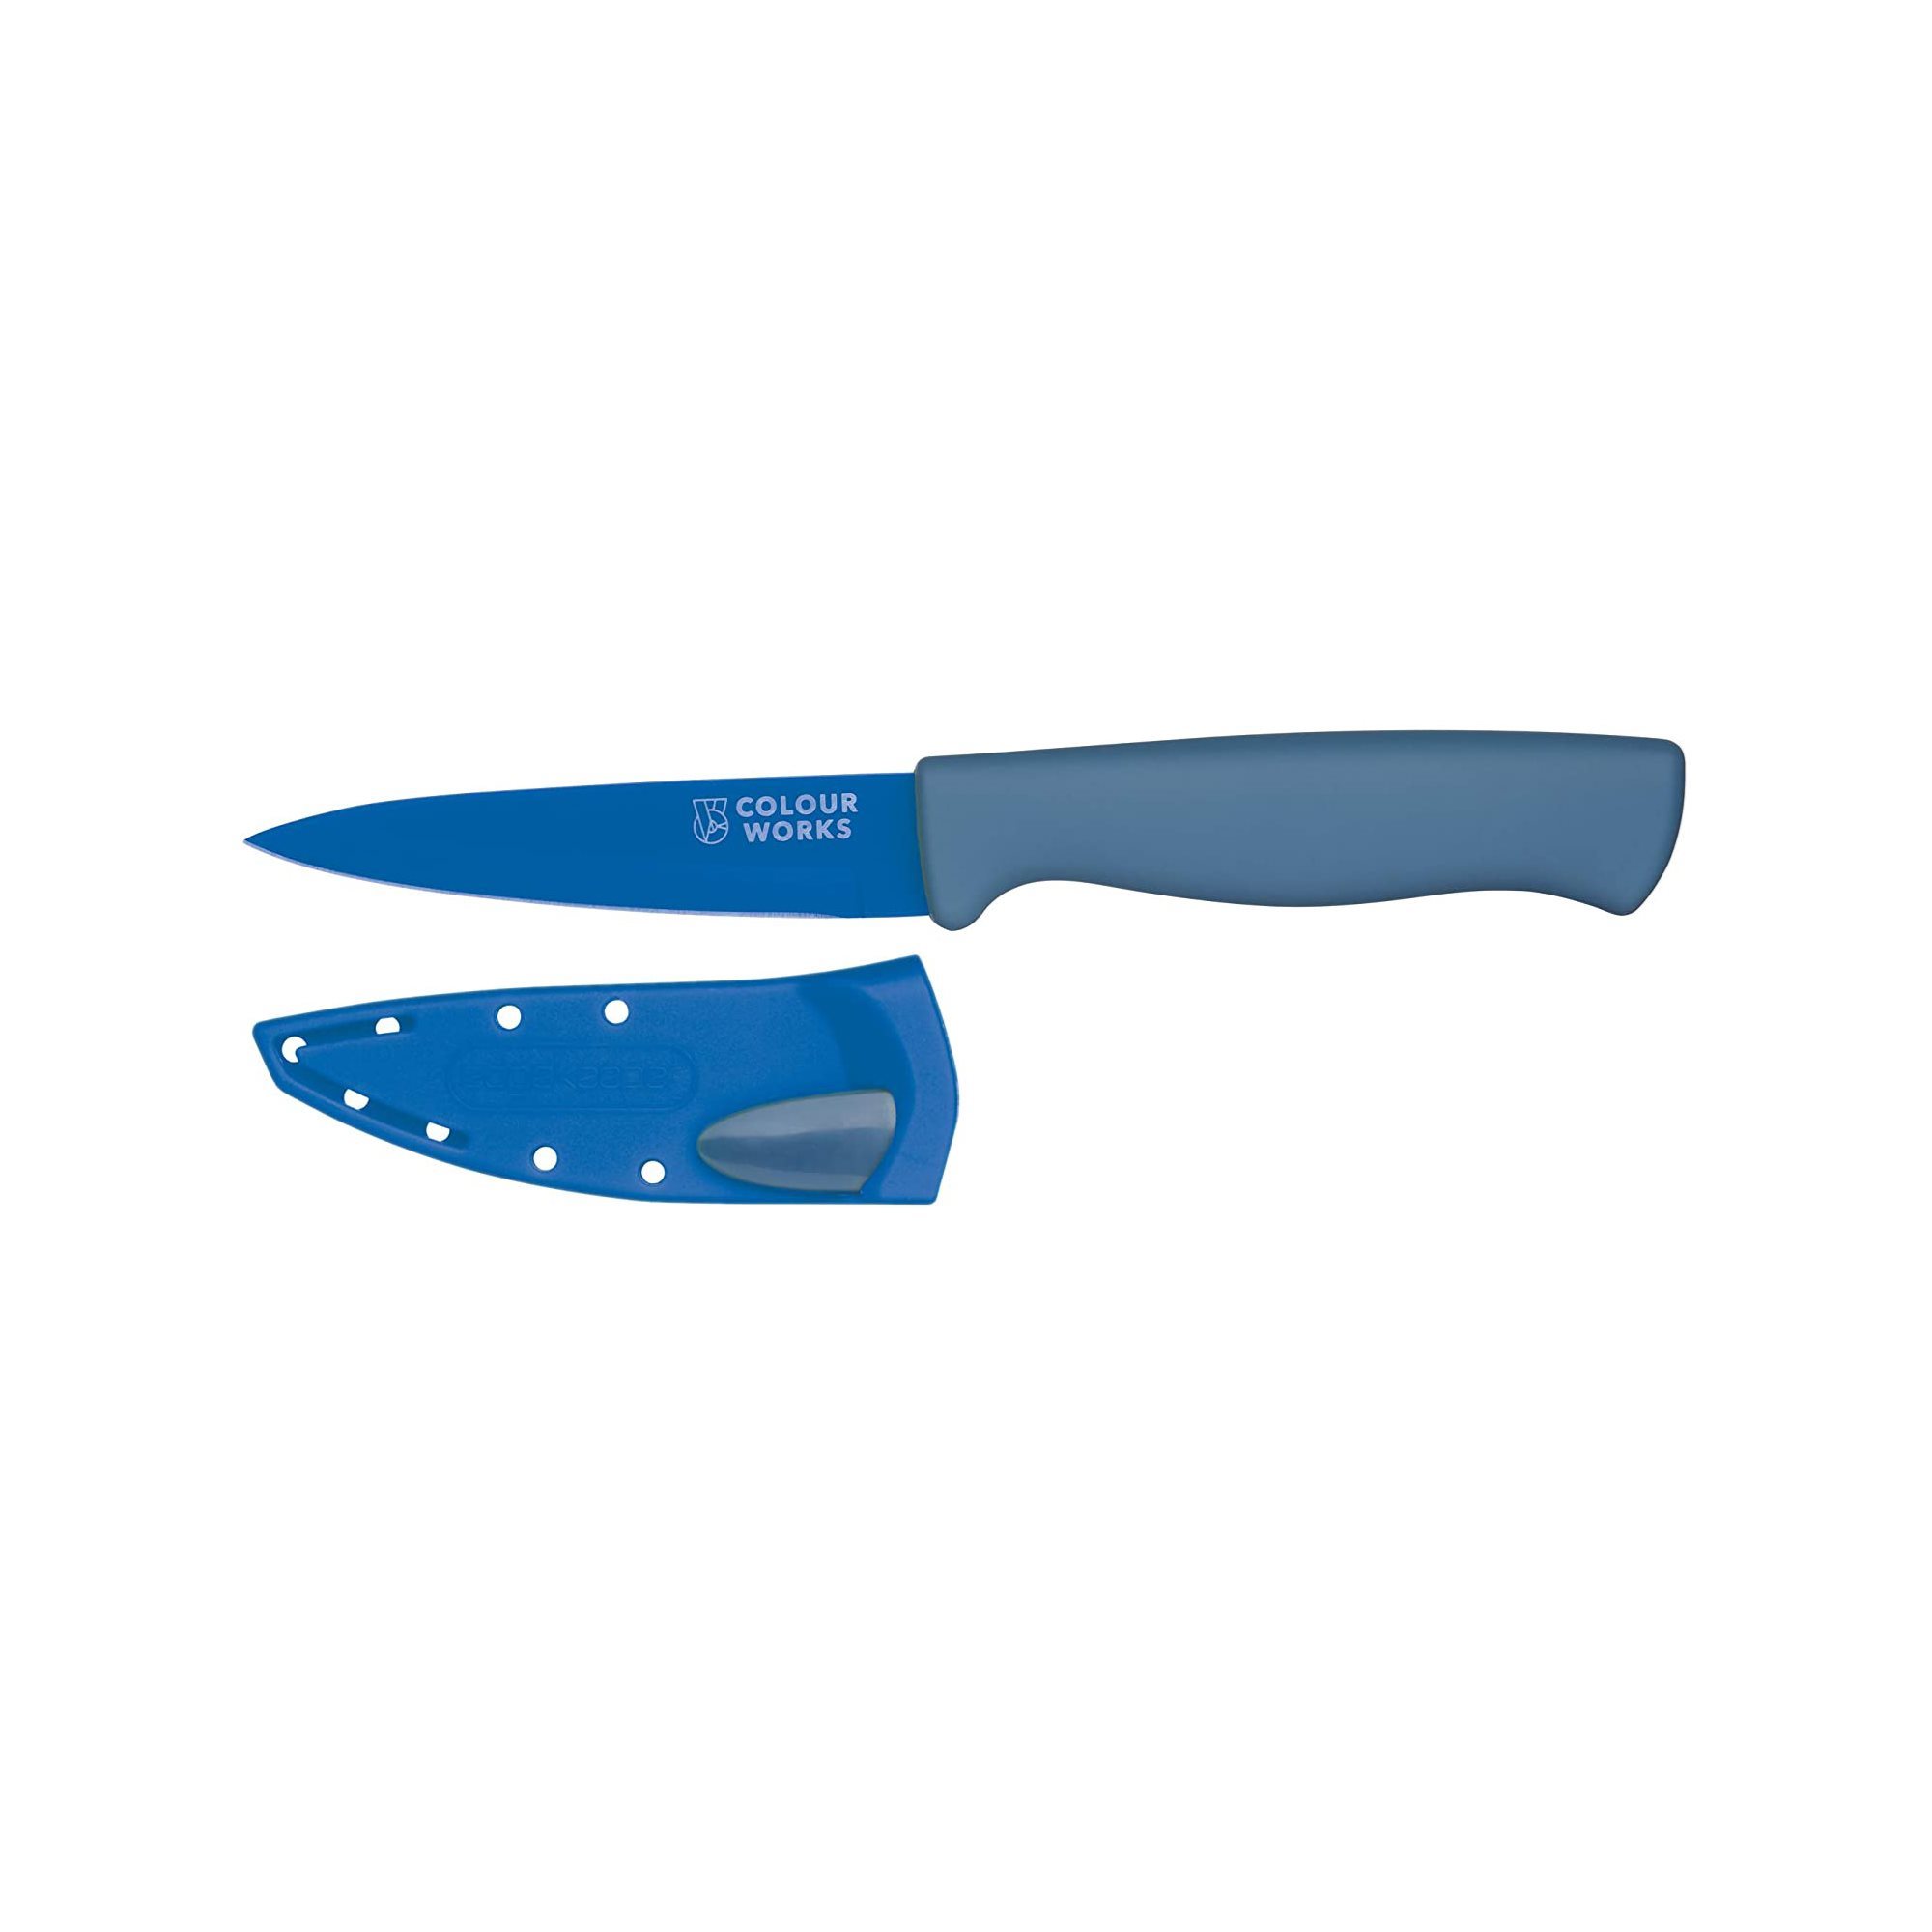 Paring Knife Nonstick - Fuchsia